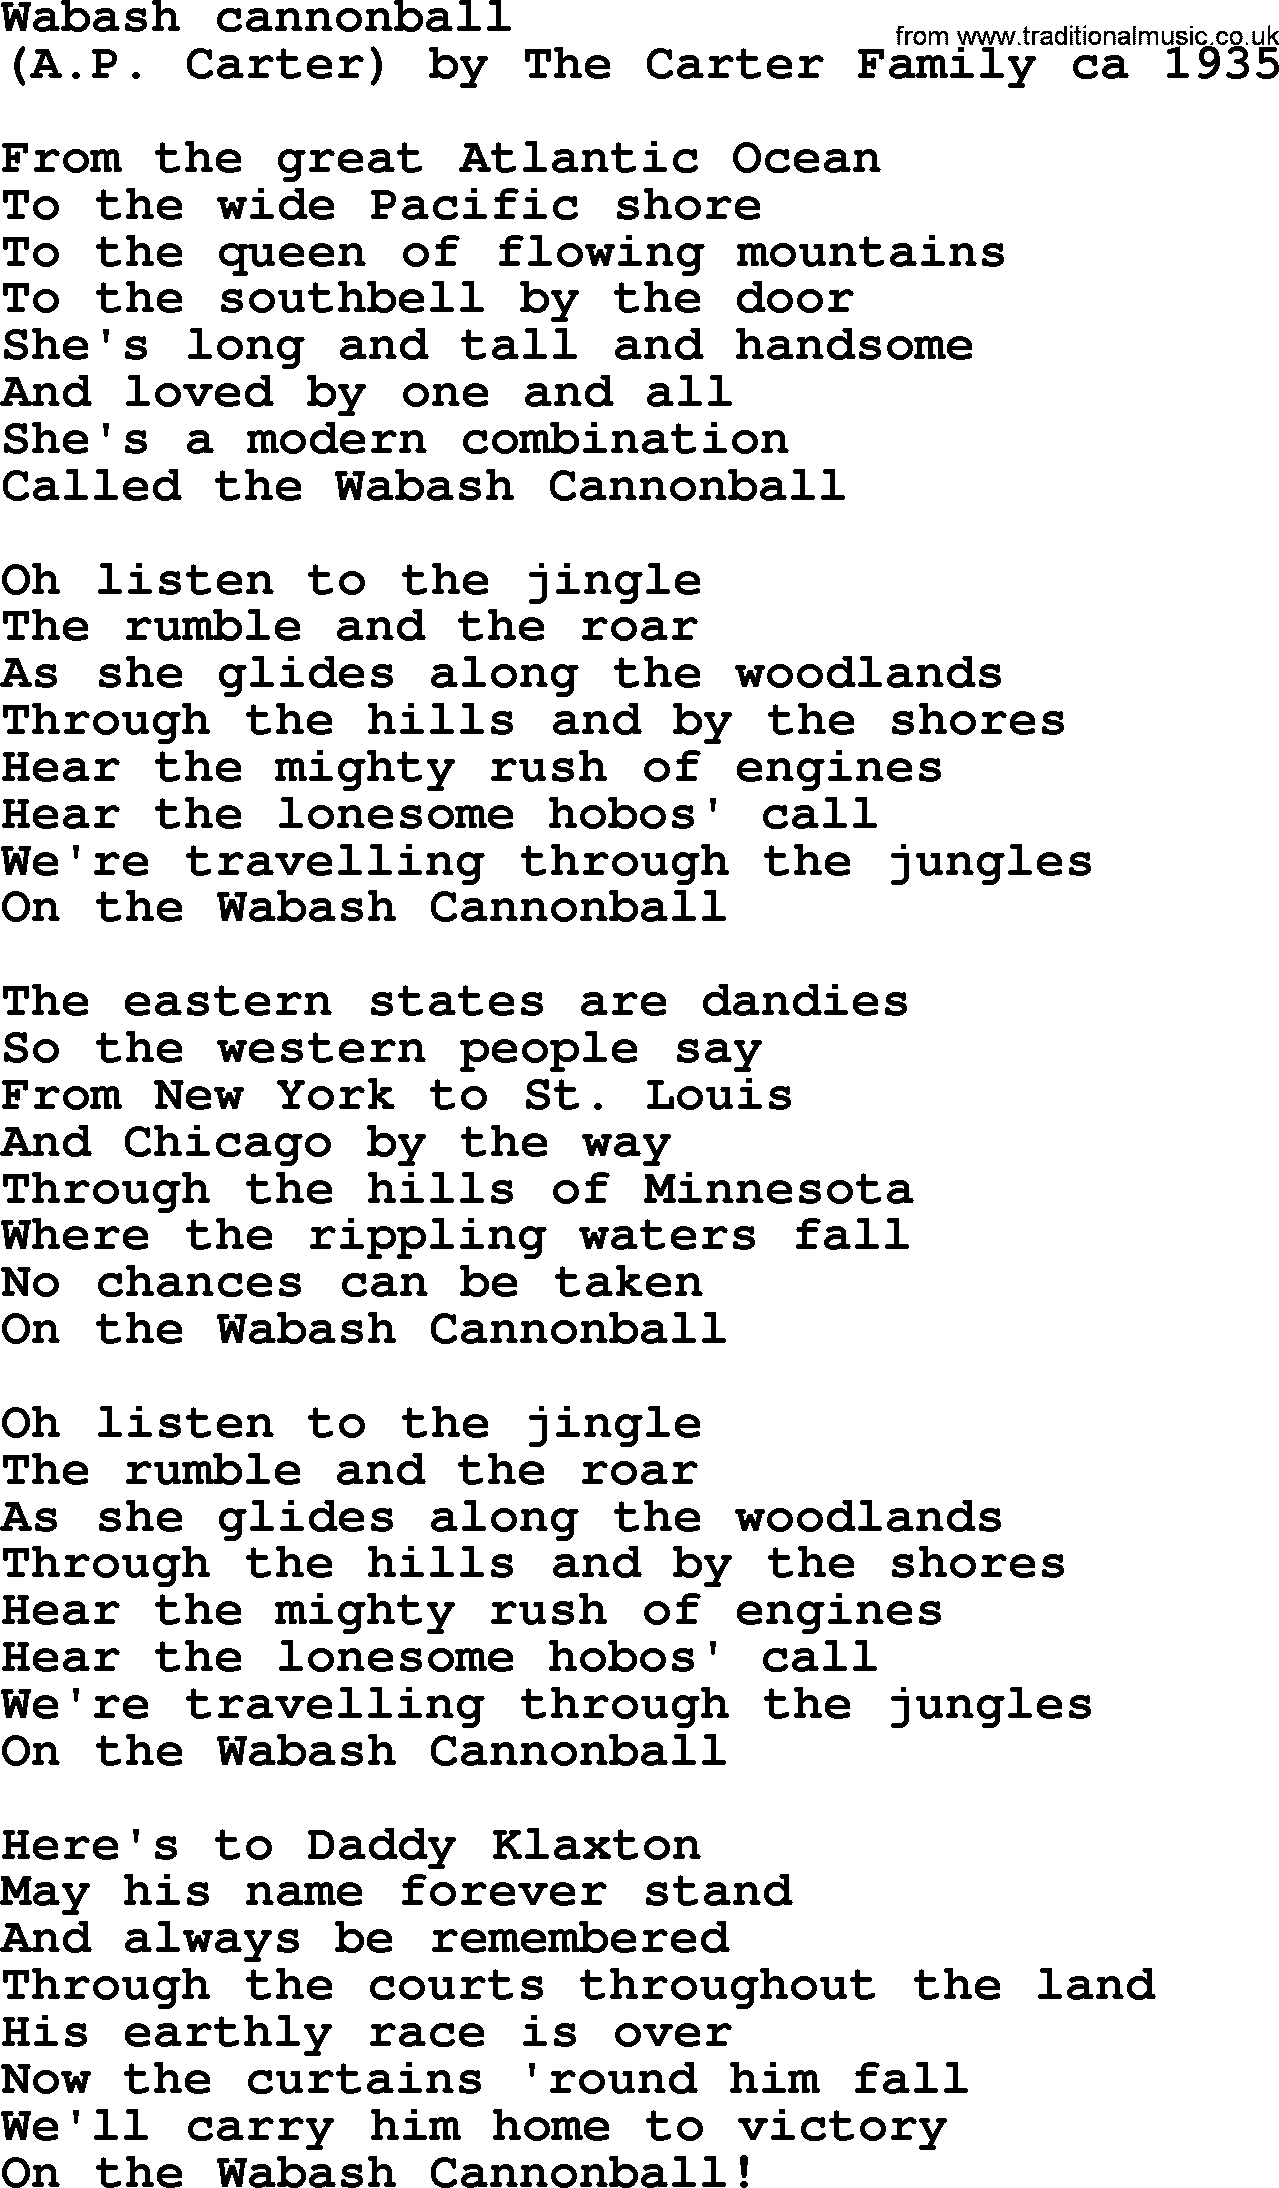 Bruce Springsteen song: Wabash Cannonball lyrics